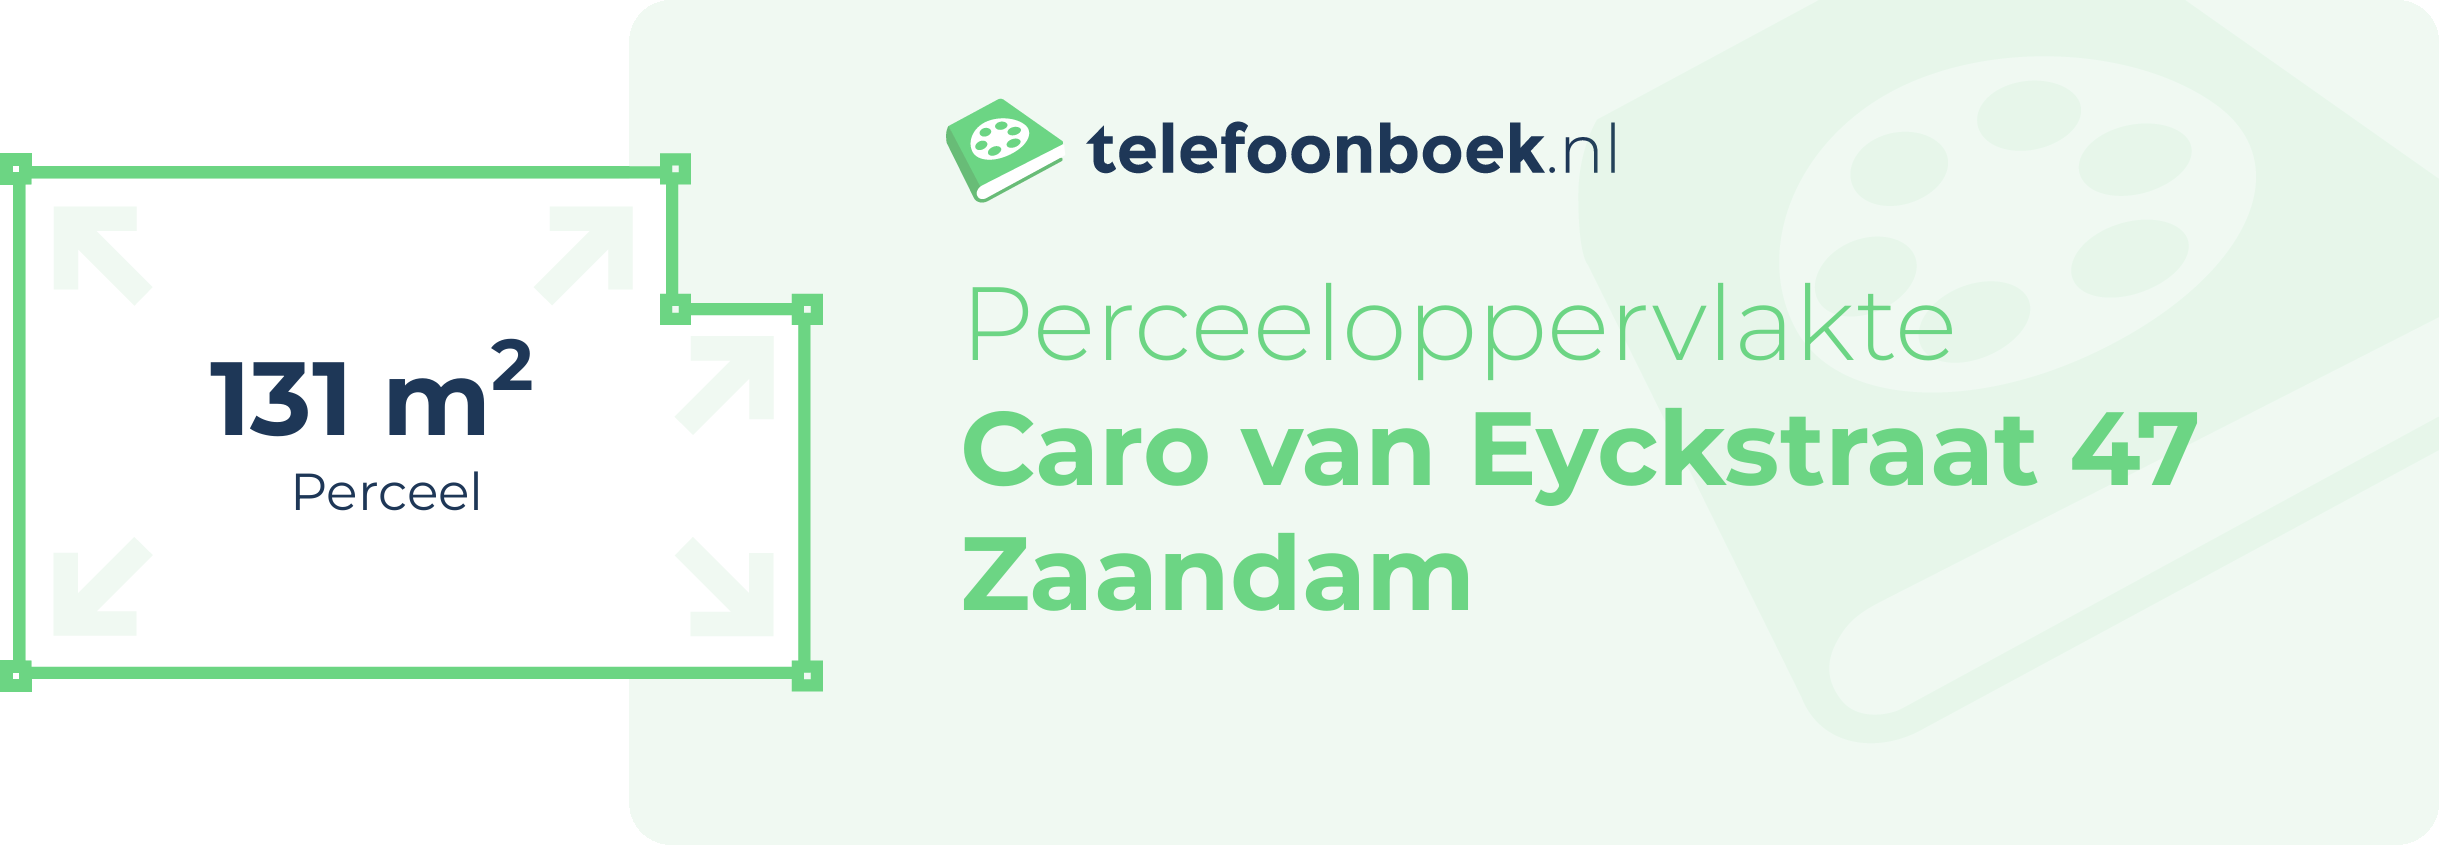 Perceeloppervlakte Caro Van Eyckstraat 47 Zaandam